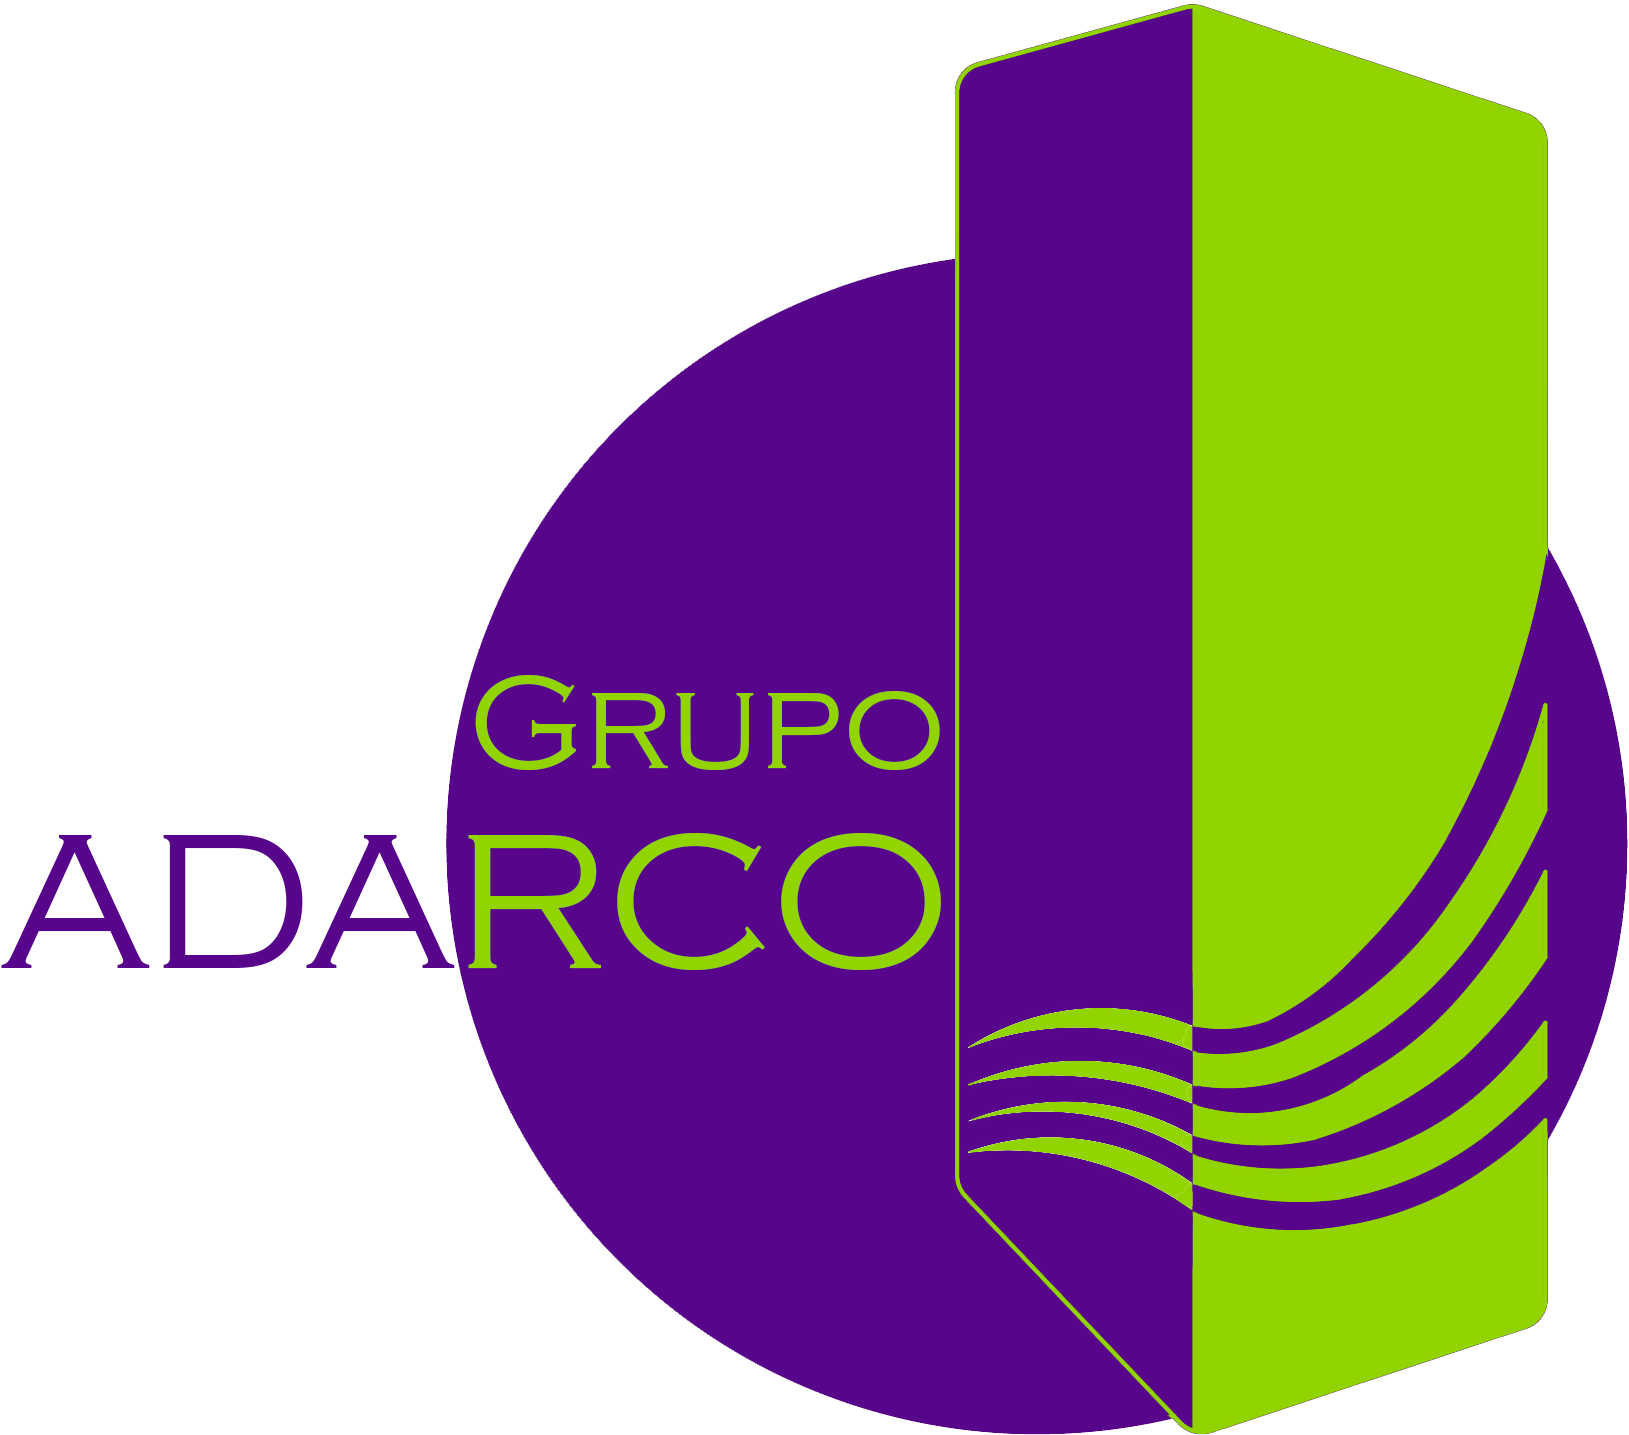 Grupo Adarco